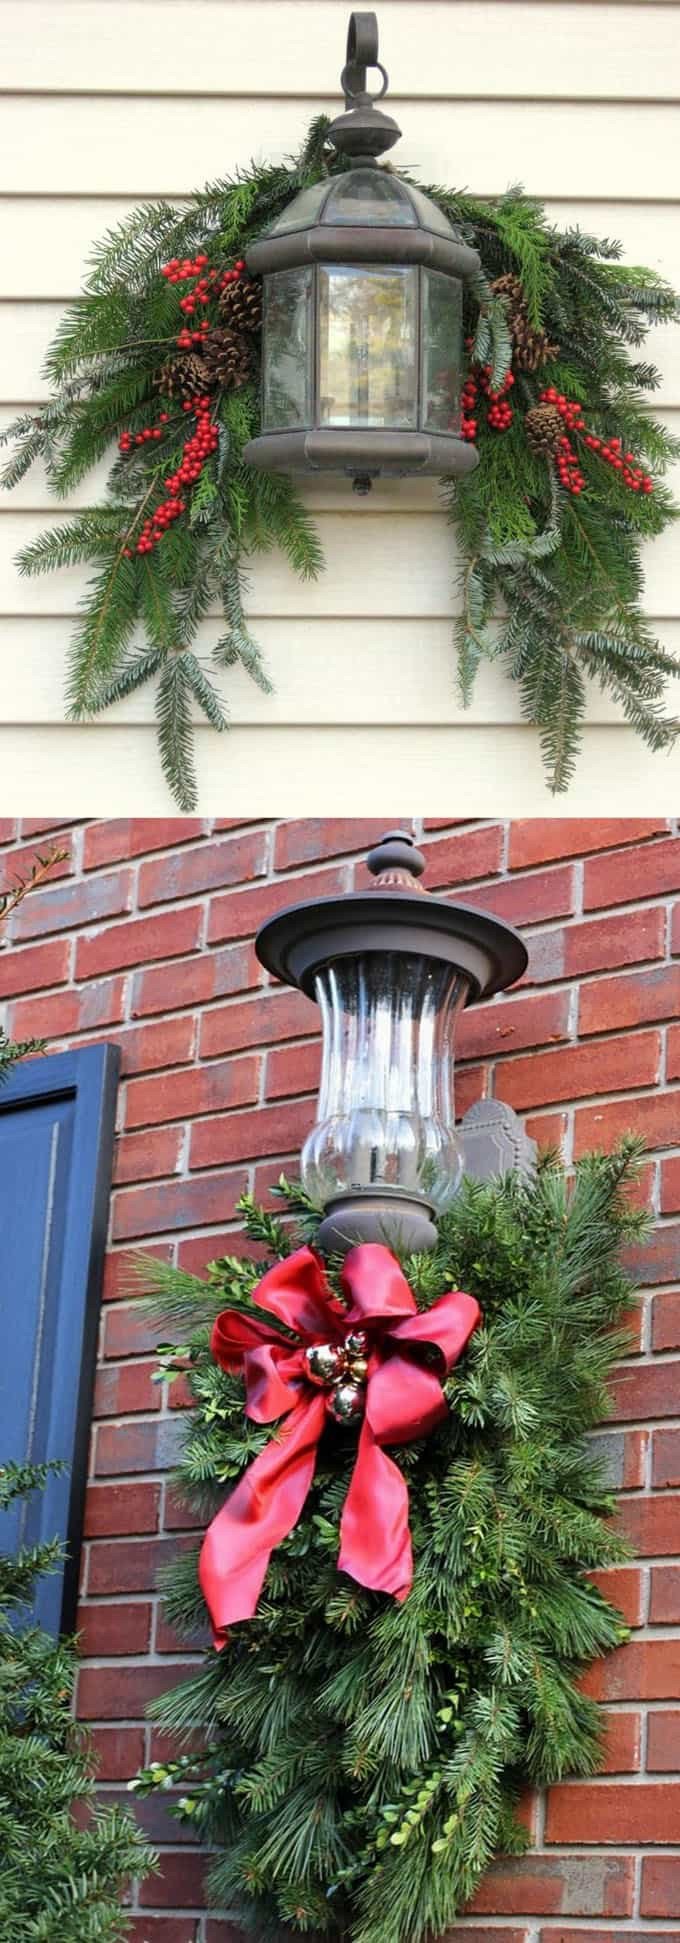 DIY Christmas Yard Decor
 Gorgeous Outdoor Christmas Decorations 32 Best Ideas